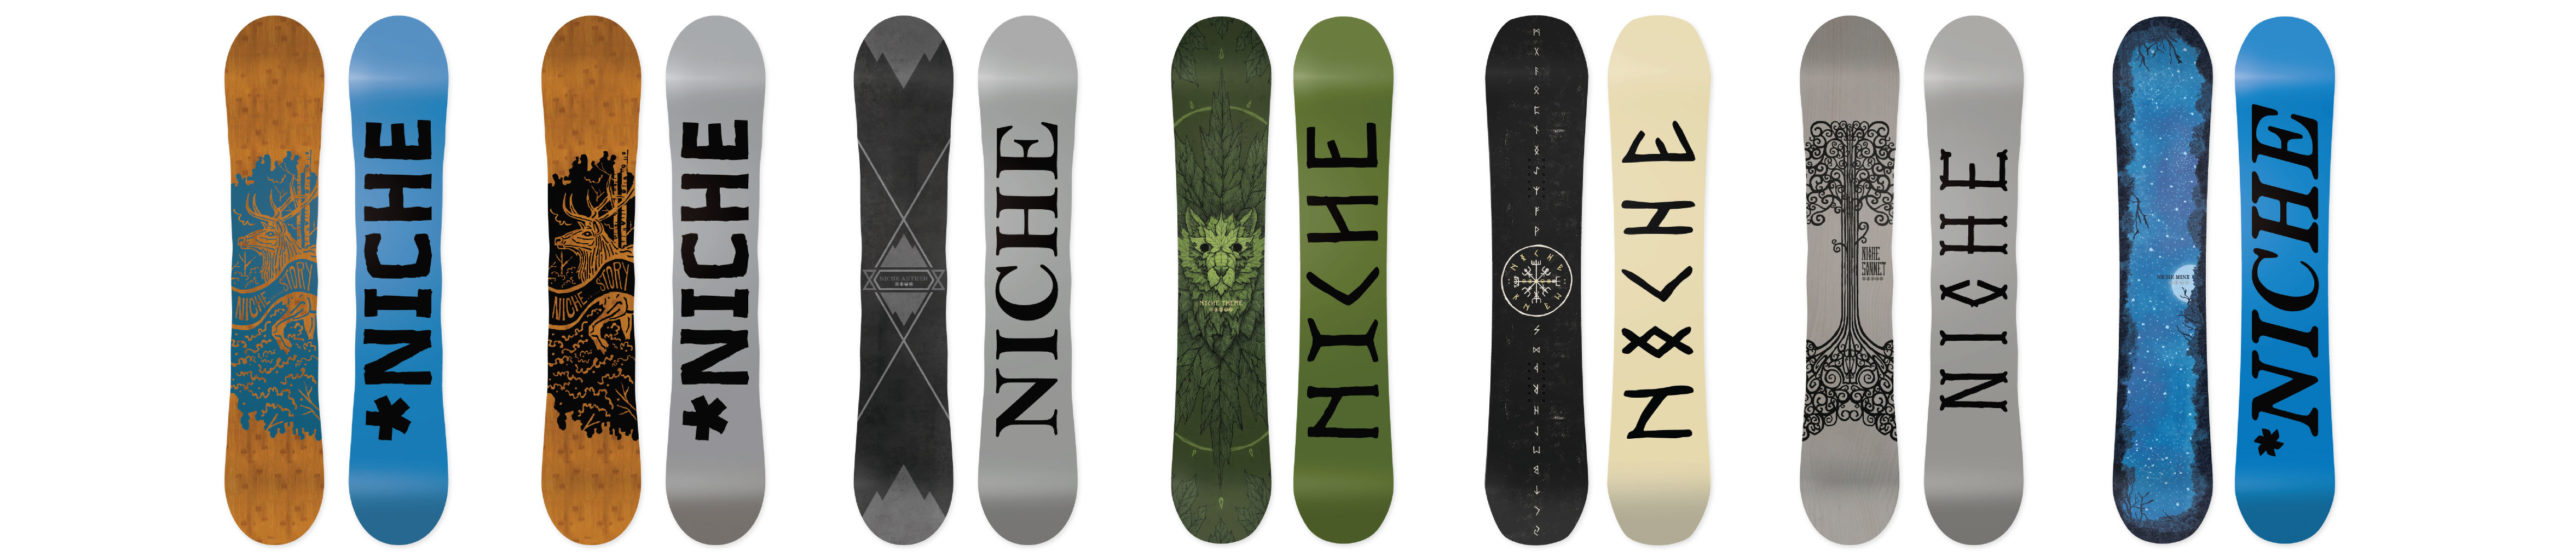 2014/15 Niche Snowboards graphics